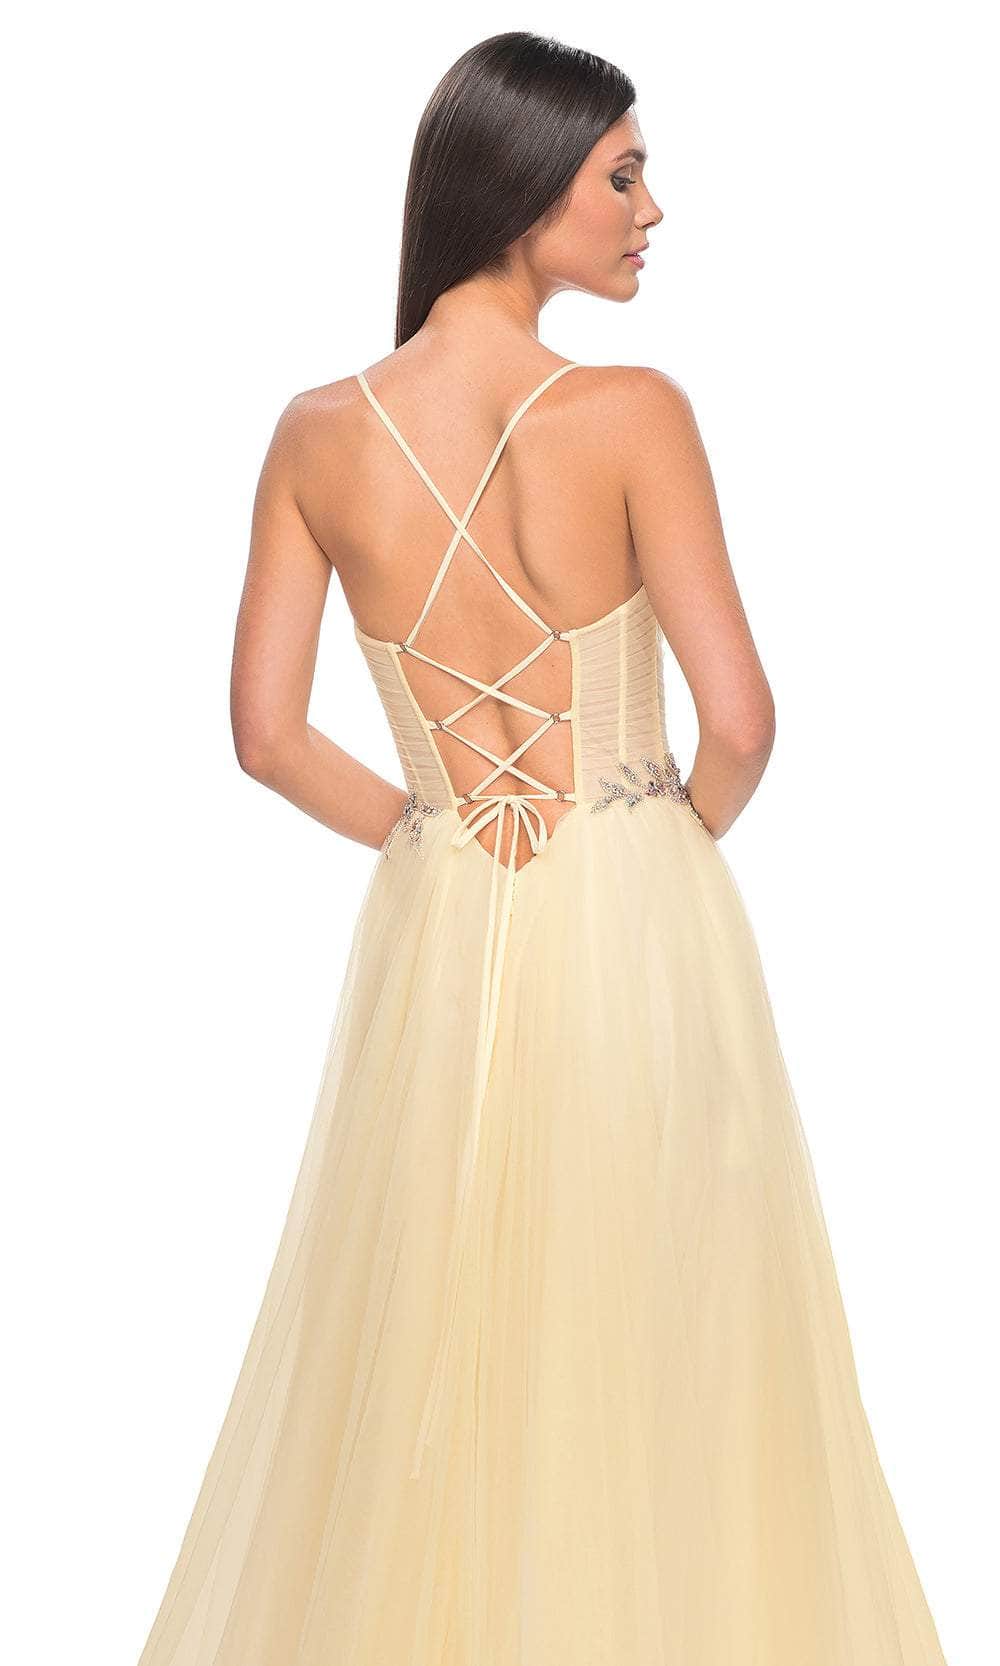 La Femme 32117 - Corset Bodice Prom Dress Evening Dresses